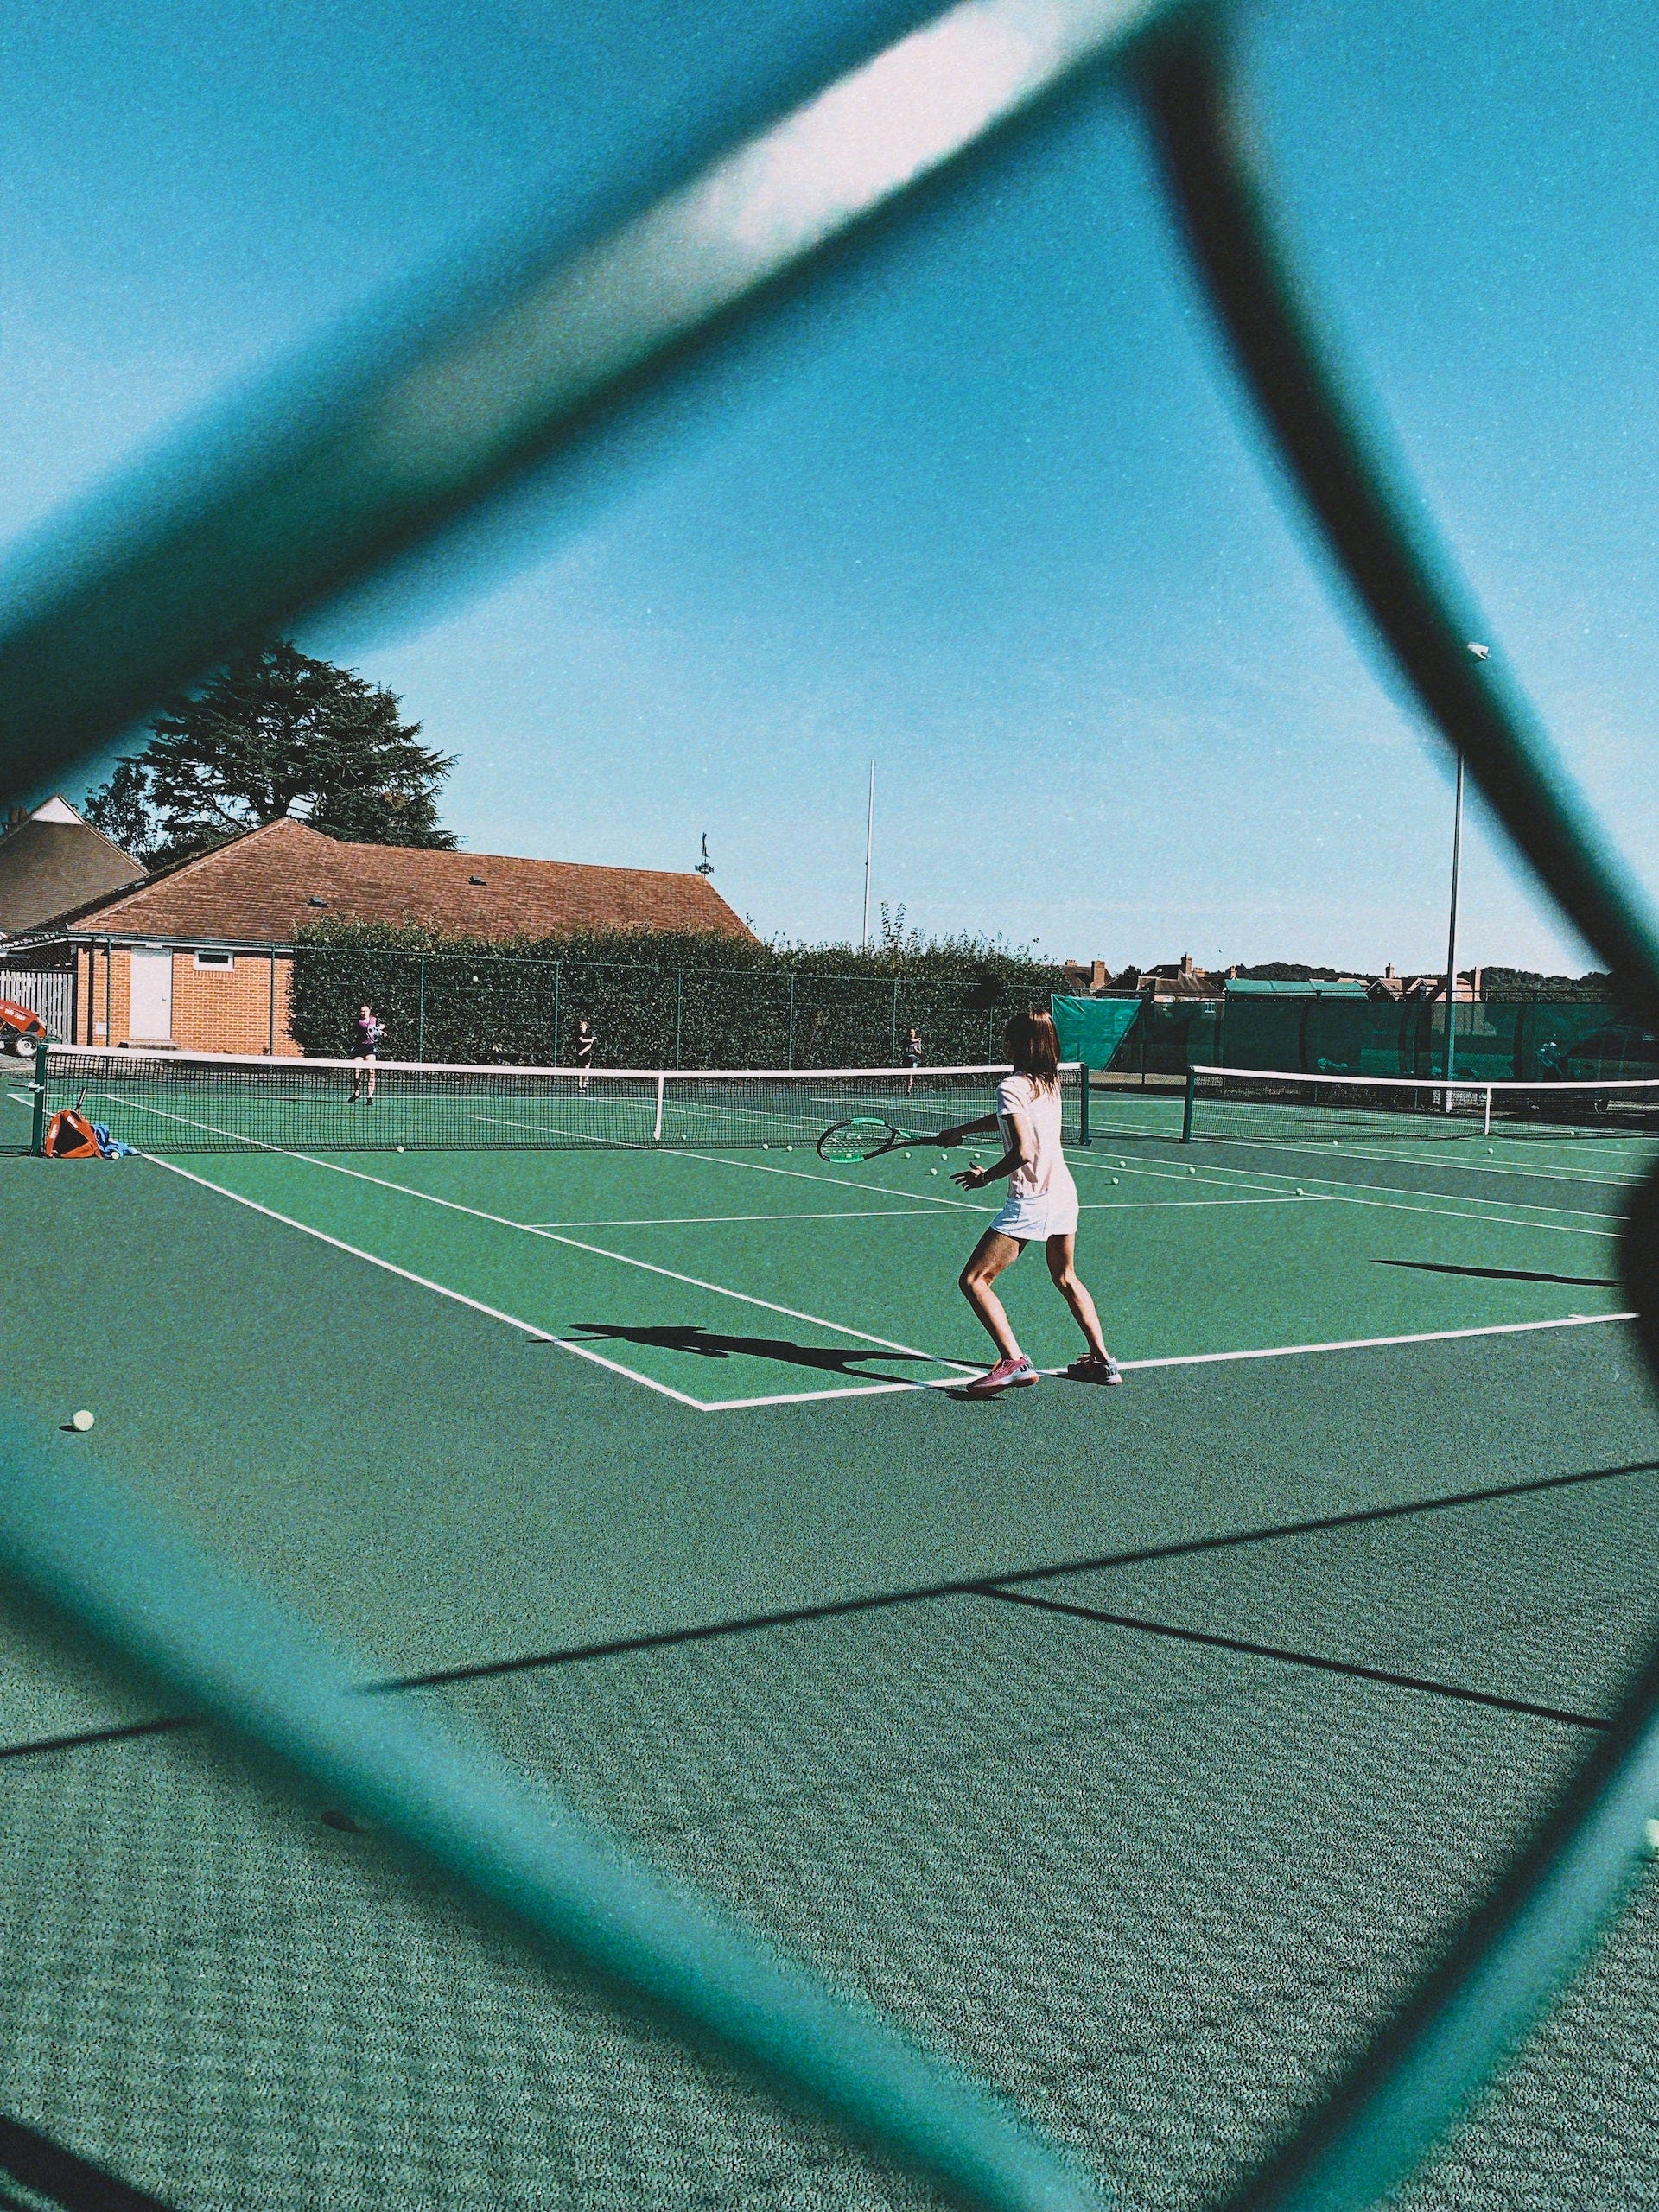 Women play tennis in a public facility.